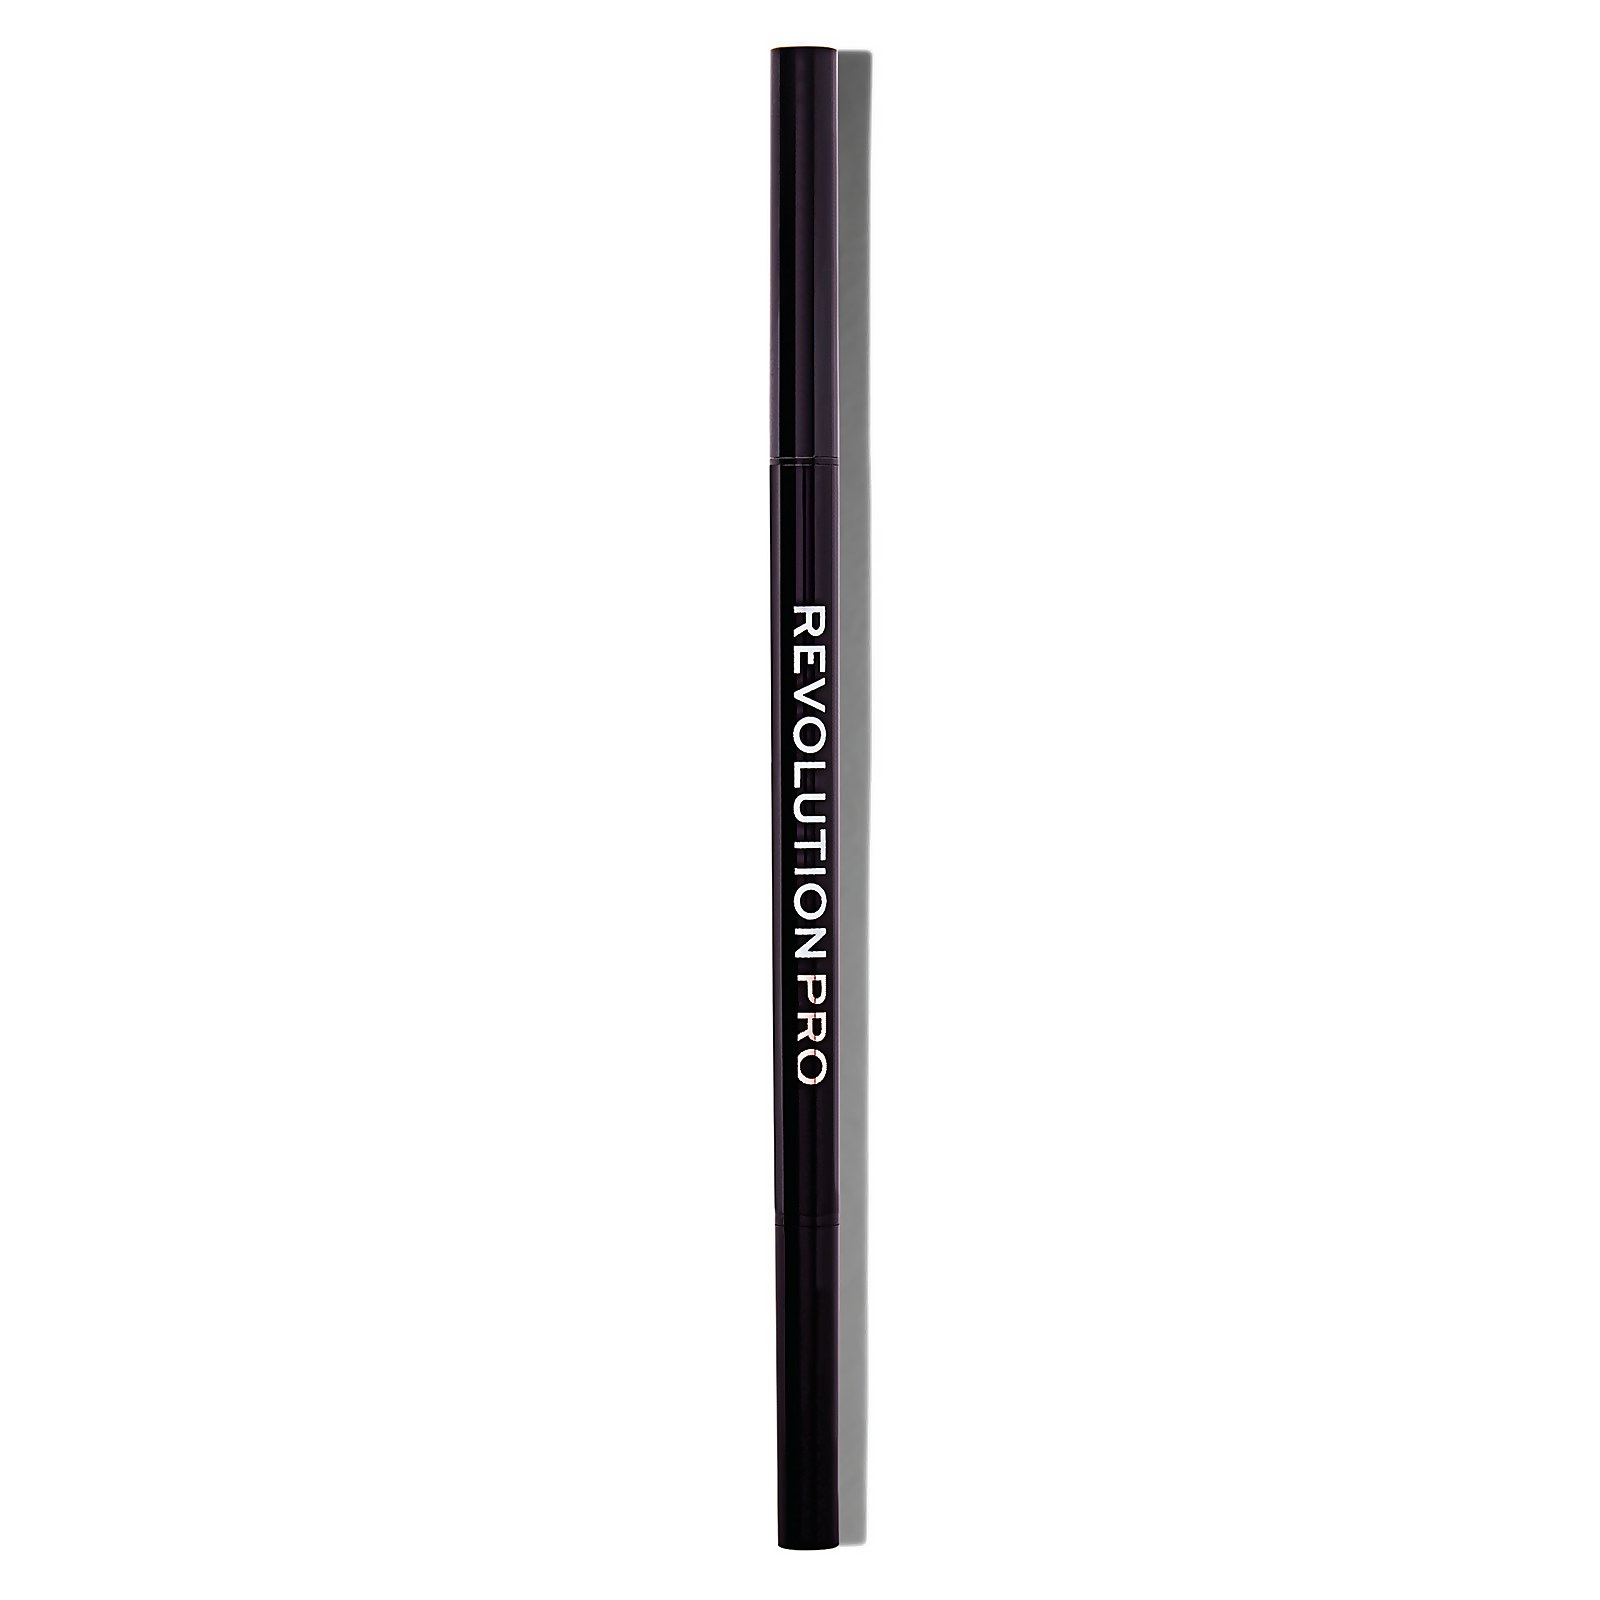 Image of Revolution Pro Microblading Precision Eyebrow Pencil 0.04g (Various Shades) - Dark Brown